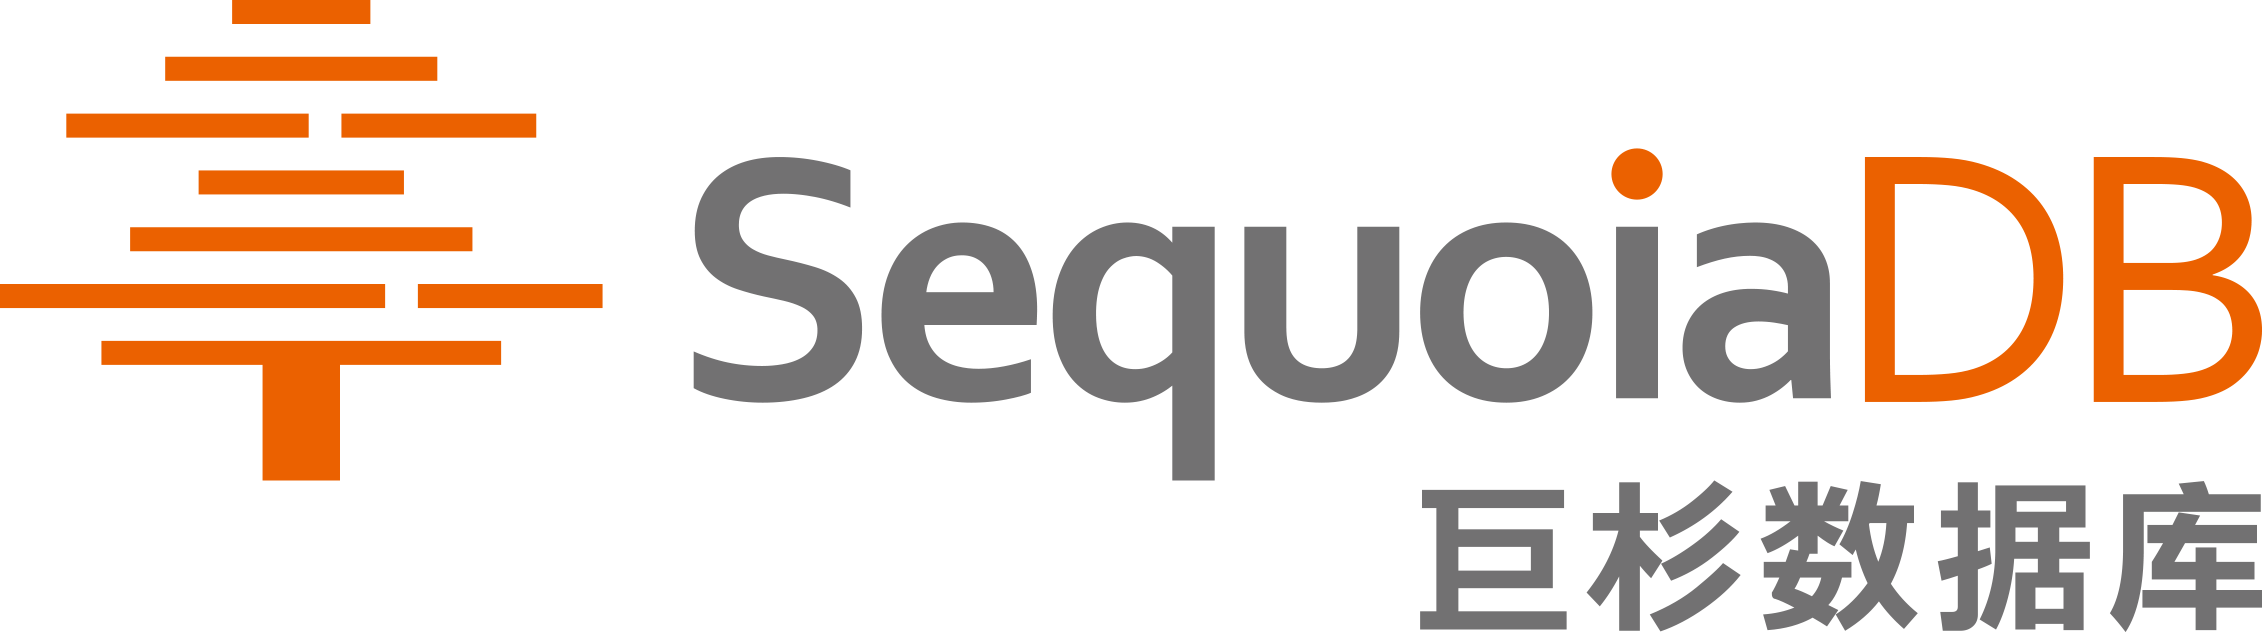 SequoiaDB